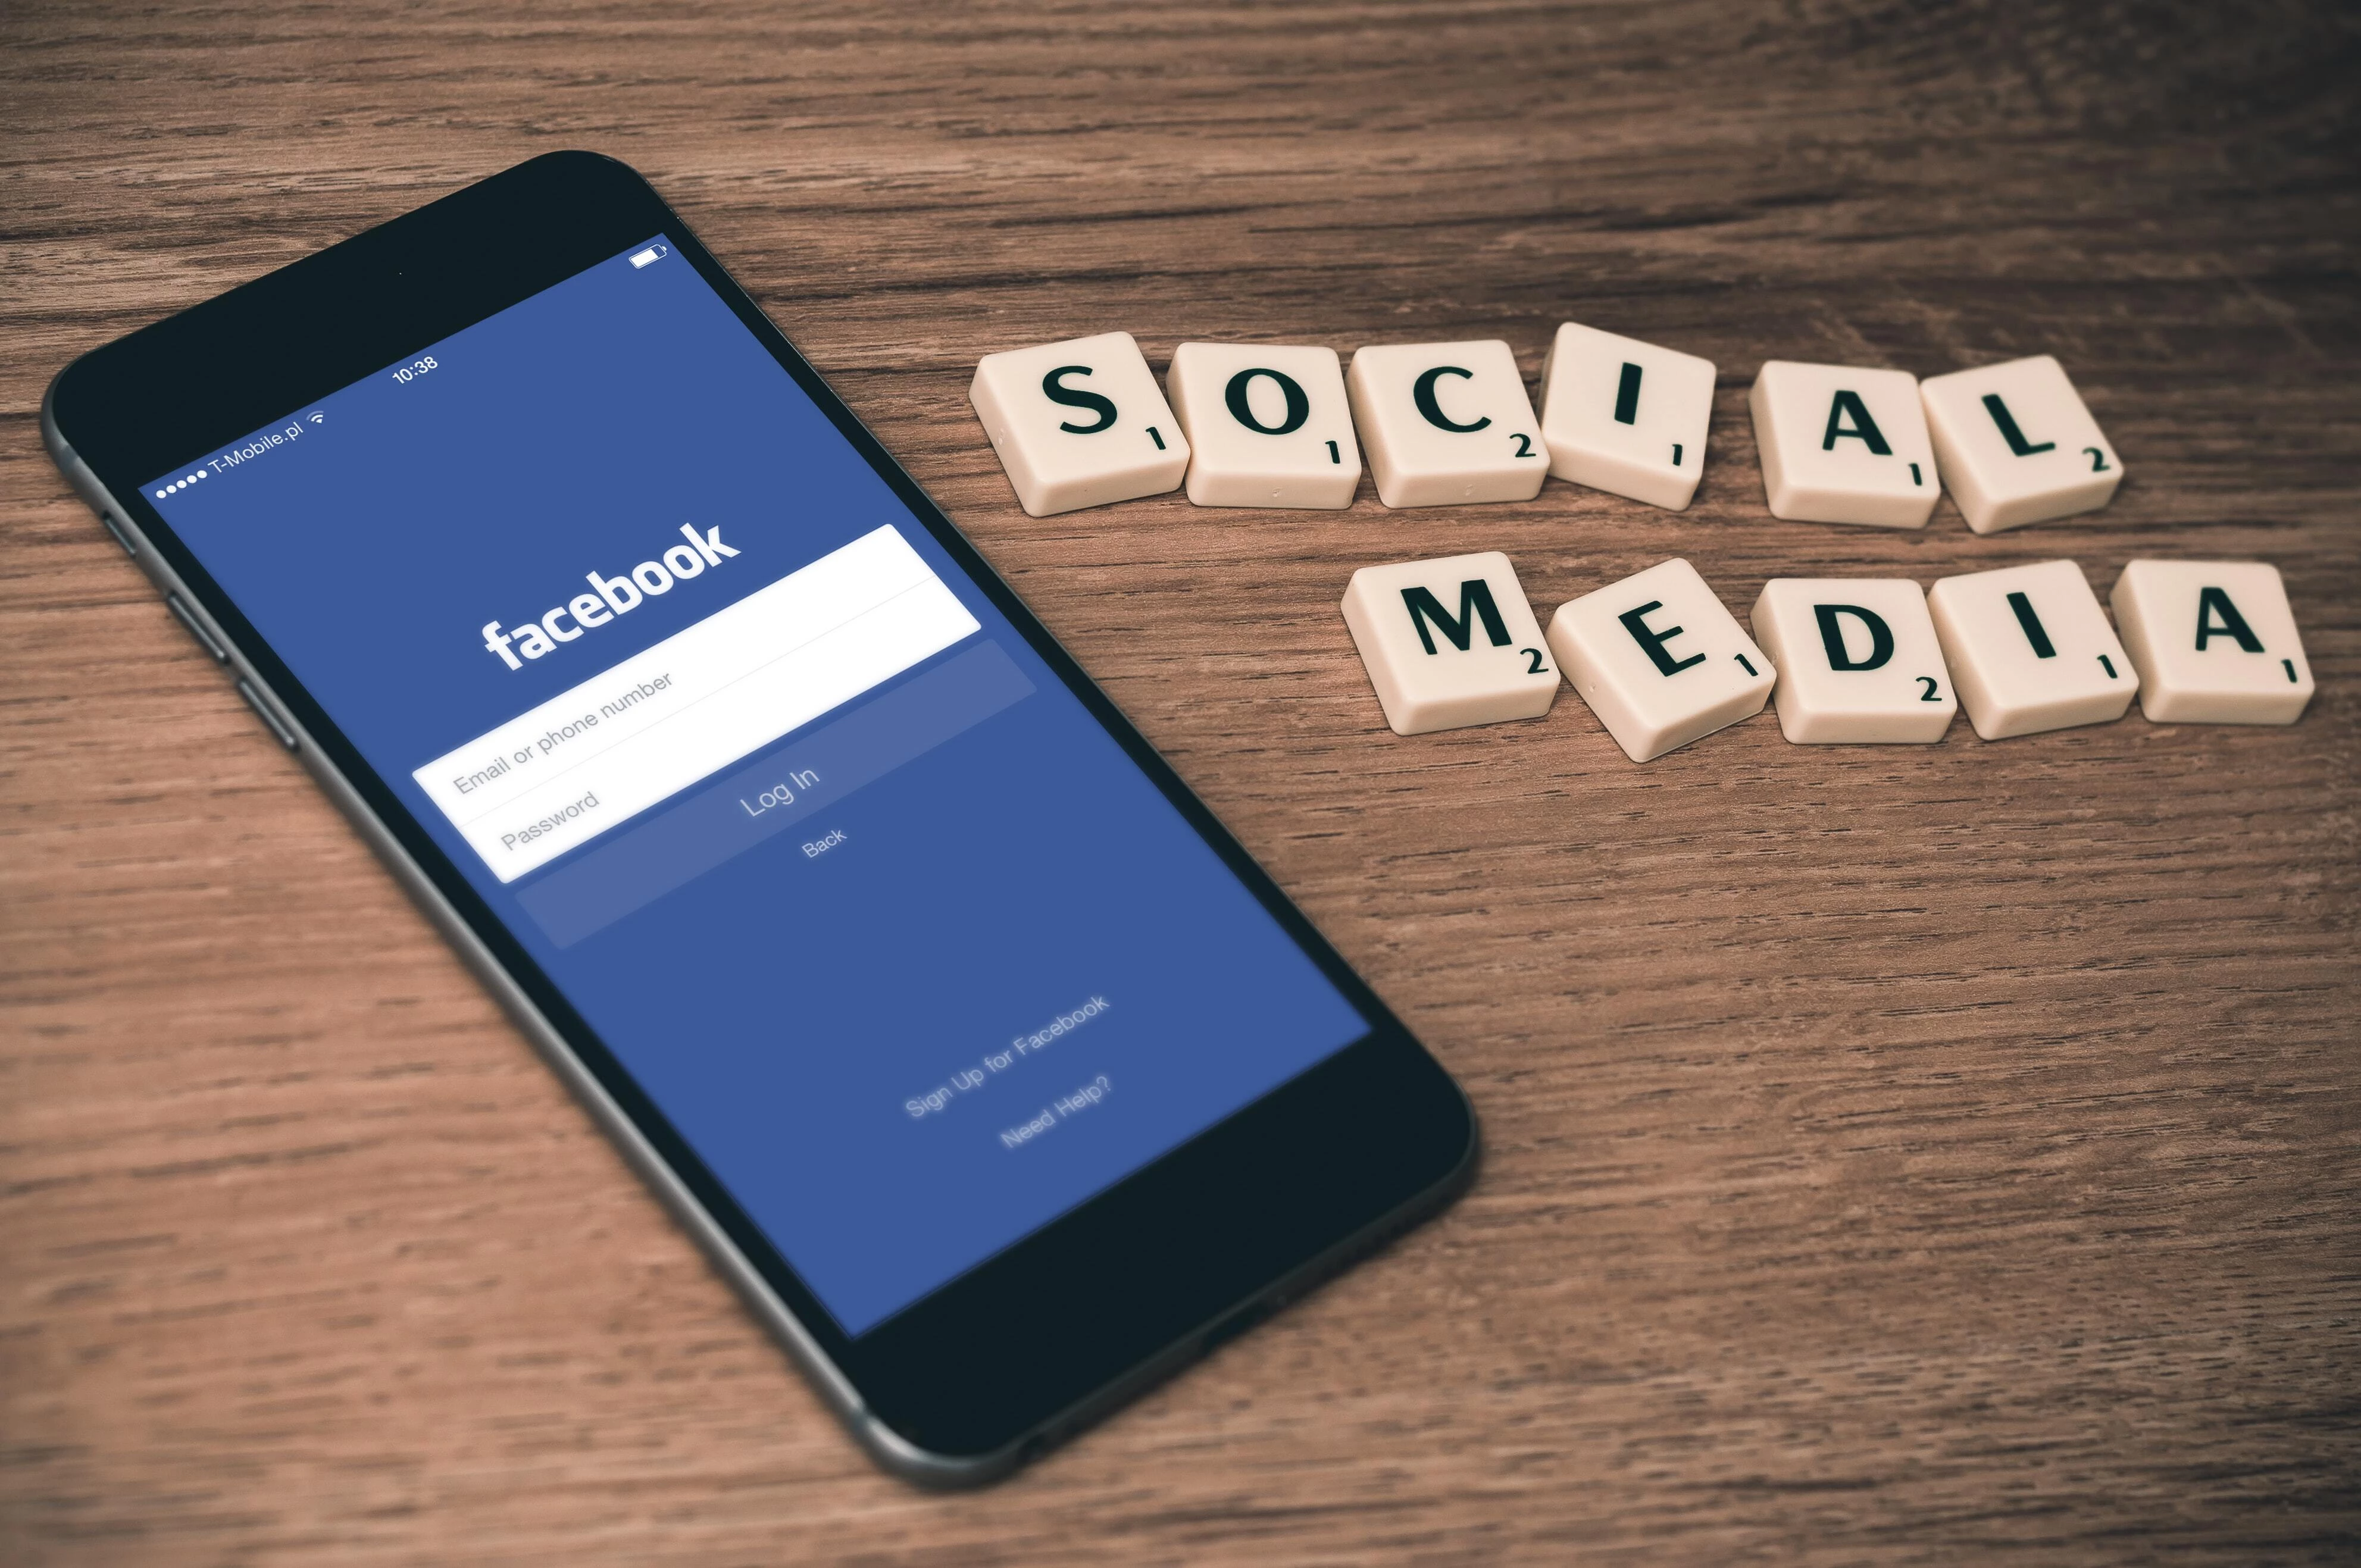 Facebook is the most used social media platform